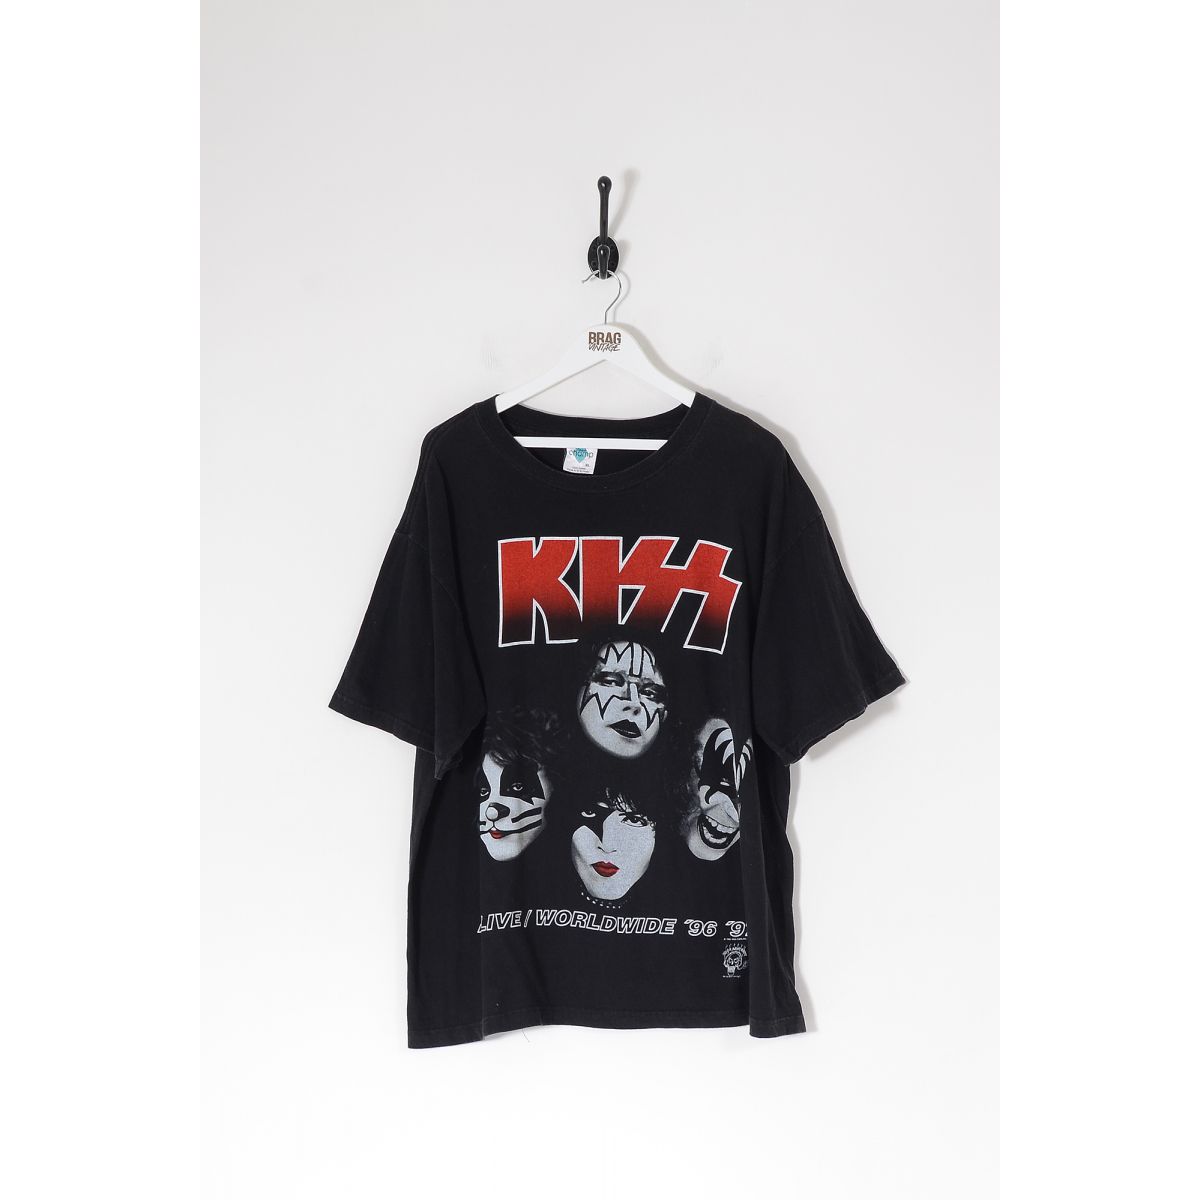 Vintage Kiss Alive / Worldwide 1996/97 Tour T-Shirt Black XL